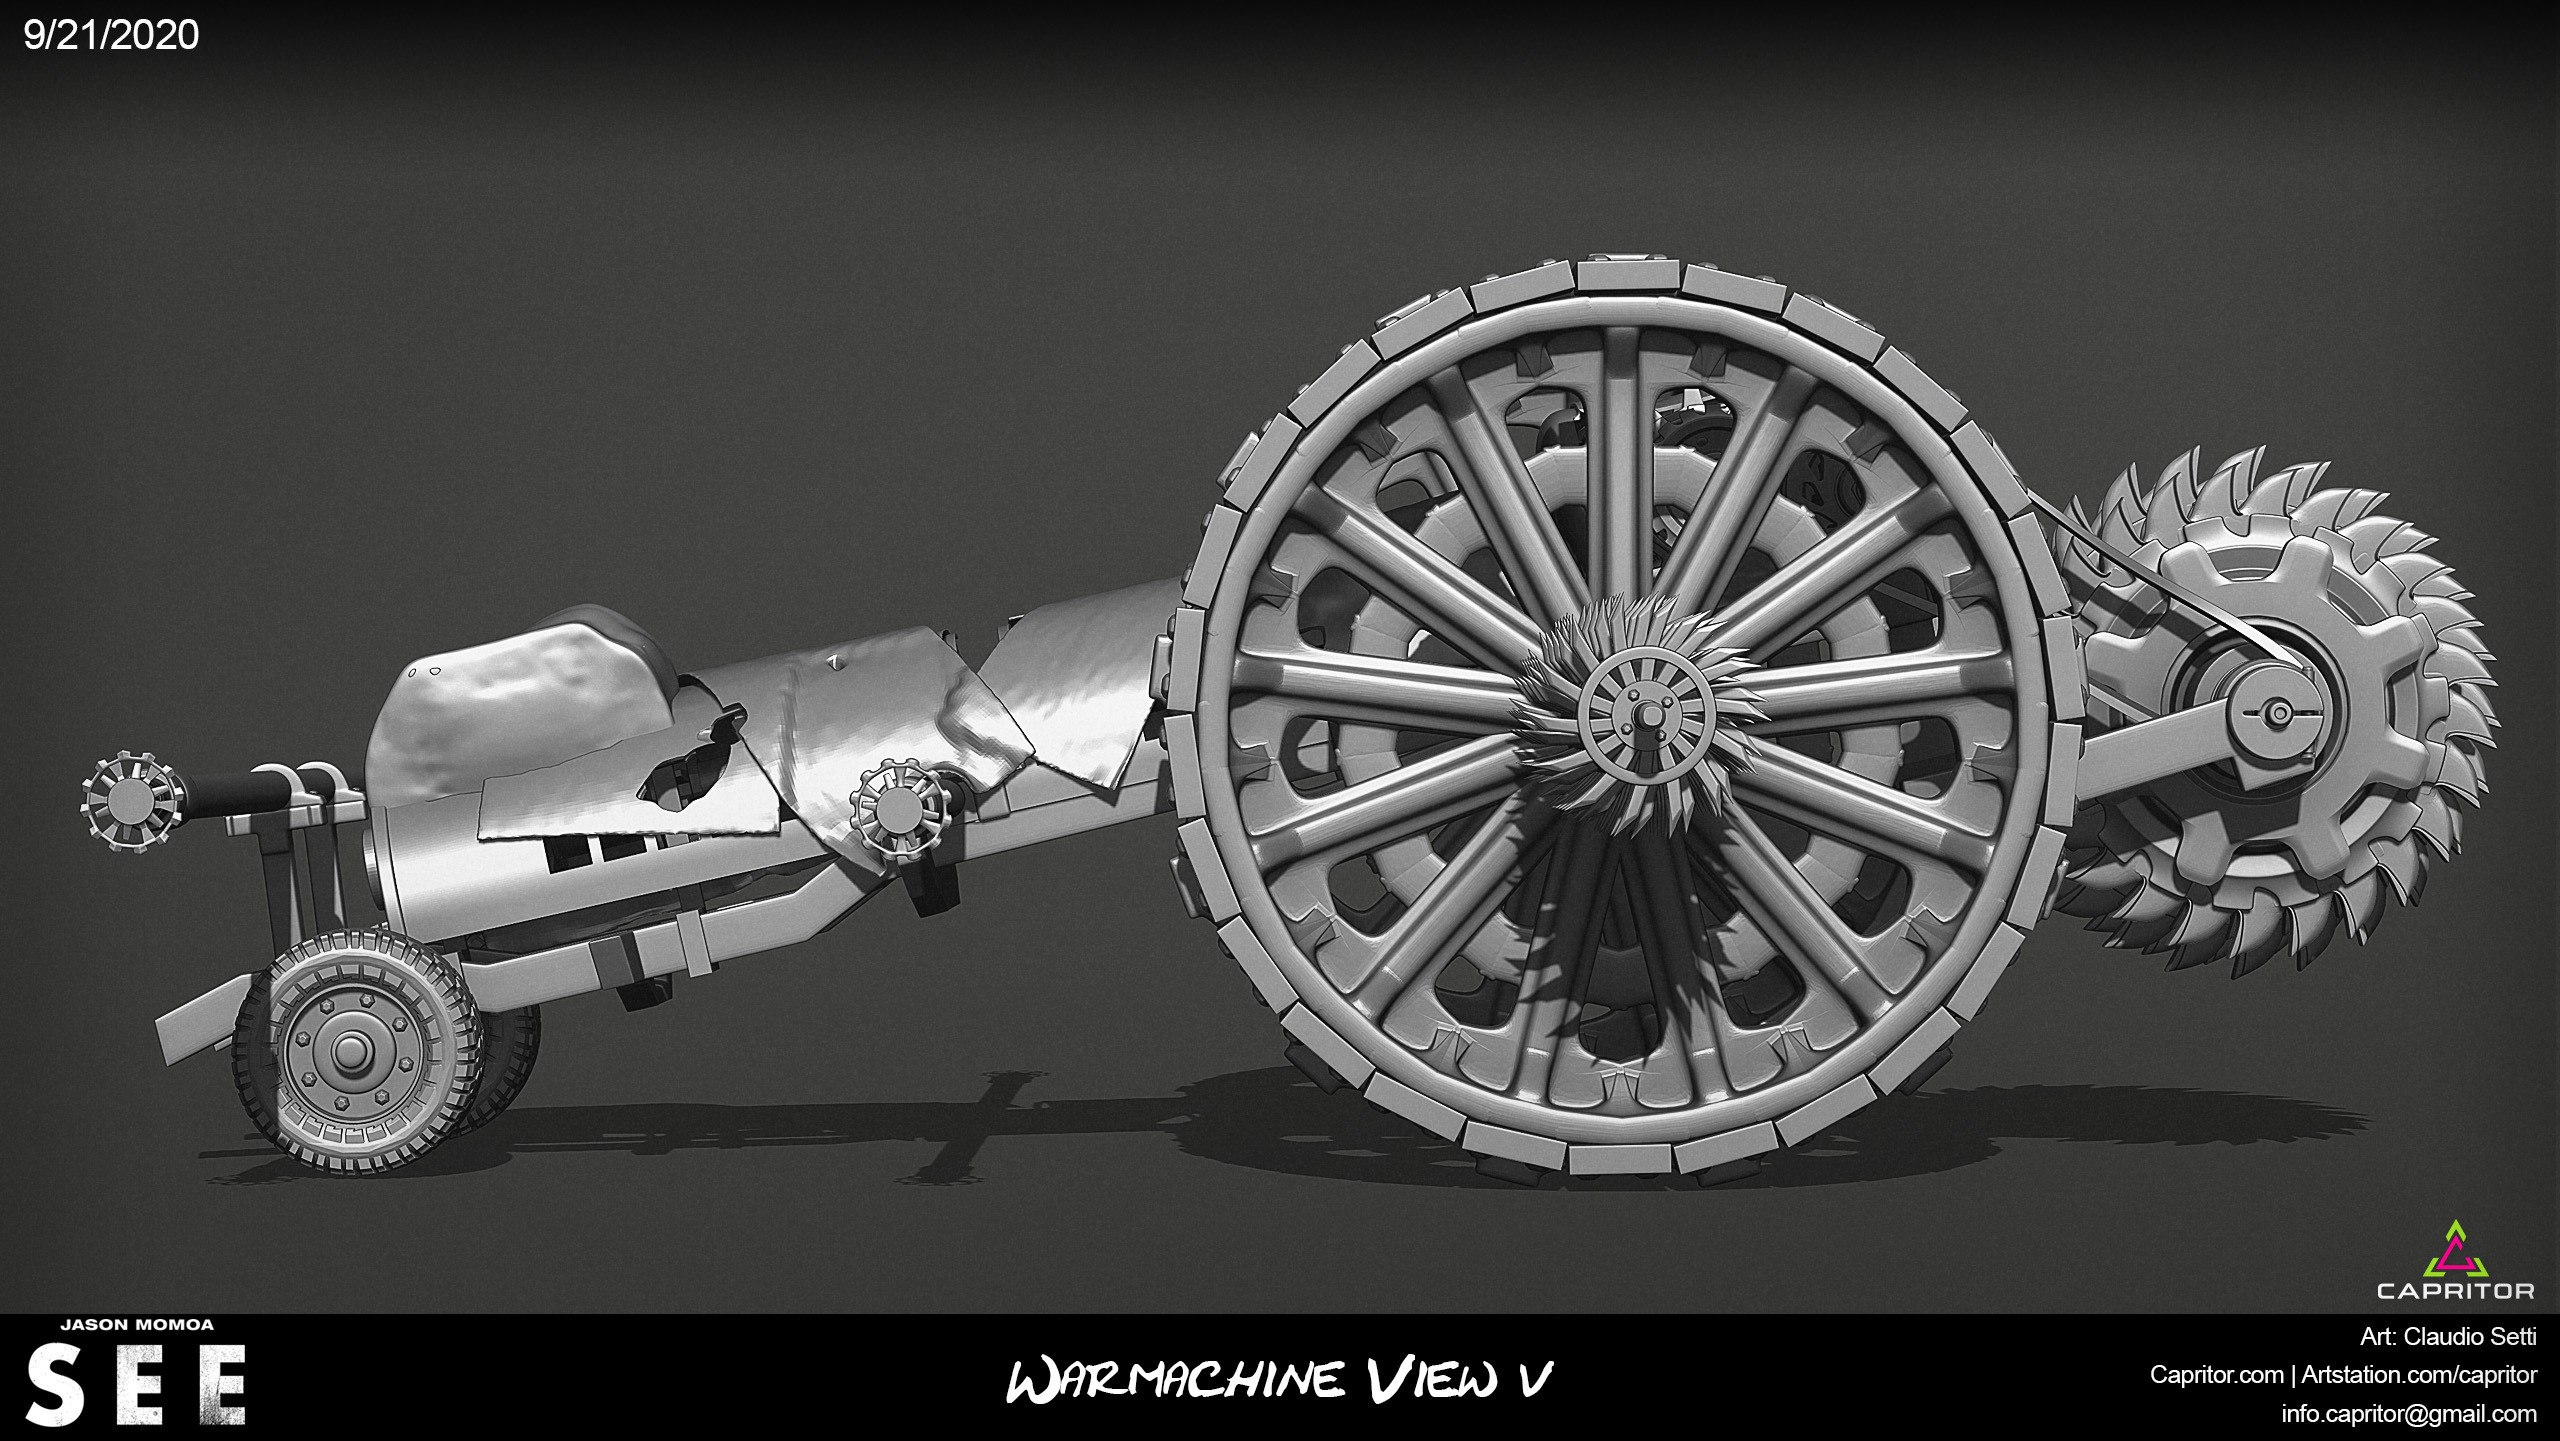 Jason Momoa - SEE - Warmachine Concept Design View 5